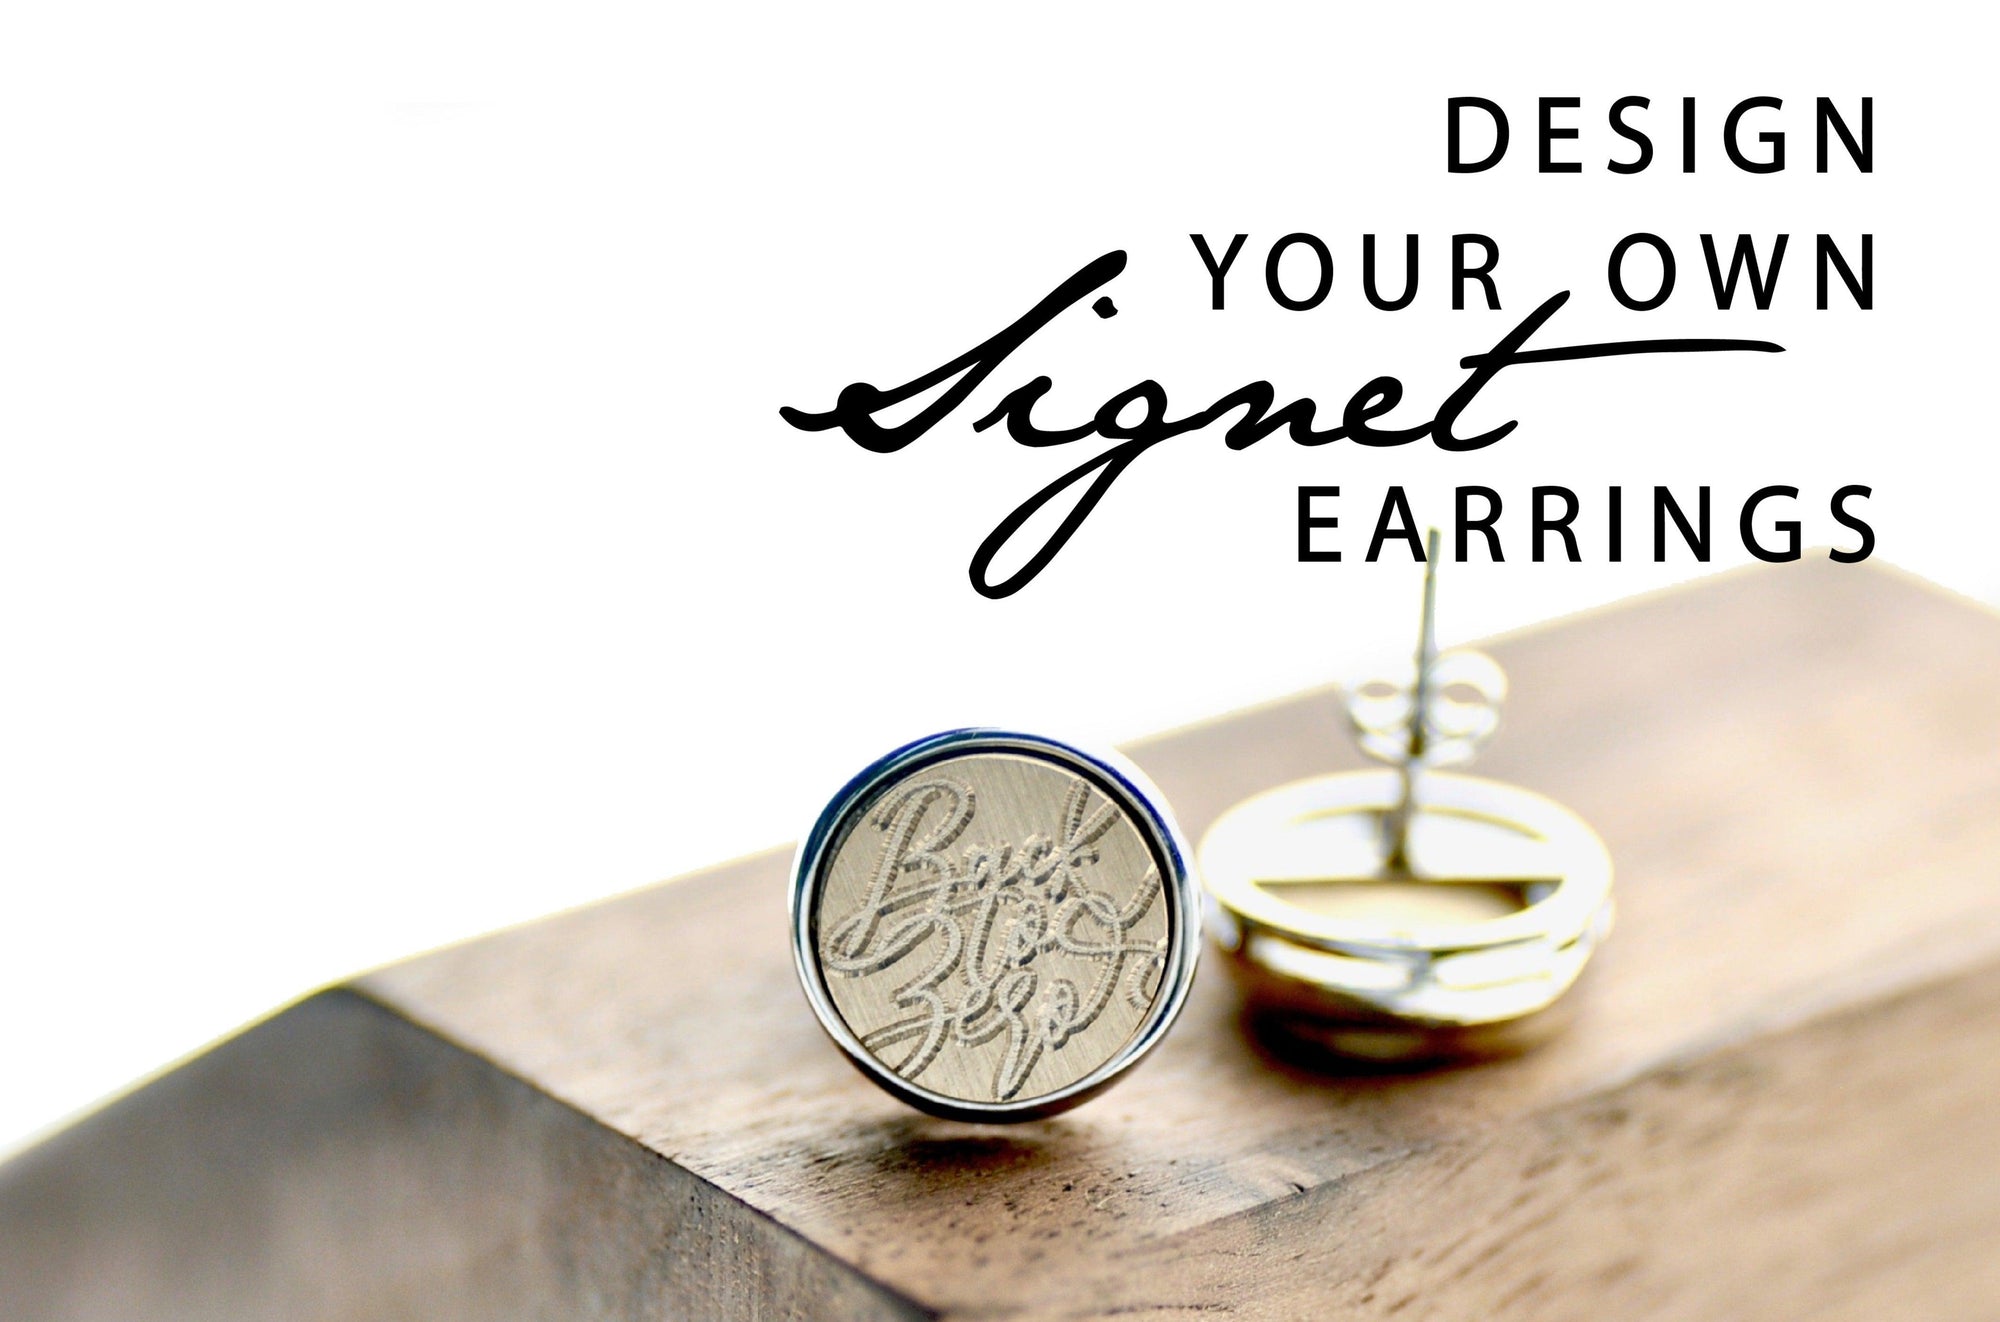 Design your own Minimal Signet Earrings - Backtozero B20 - accessory, bespoke, Custom, custom earrings, customsignet, Design Your Own, earrings, her, jewelry, minimal, minimal earrings, minimalearrings, signet